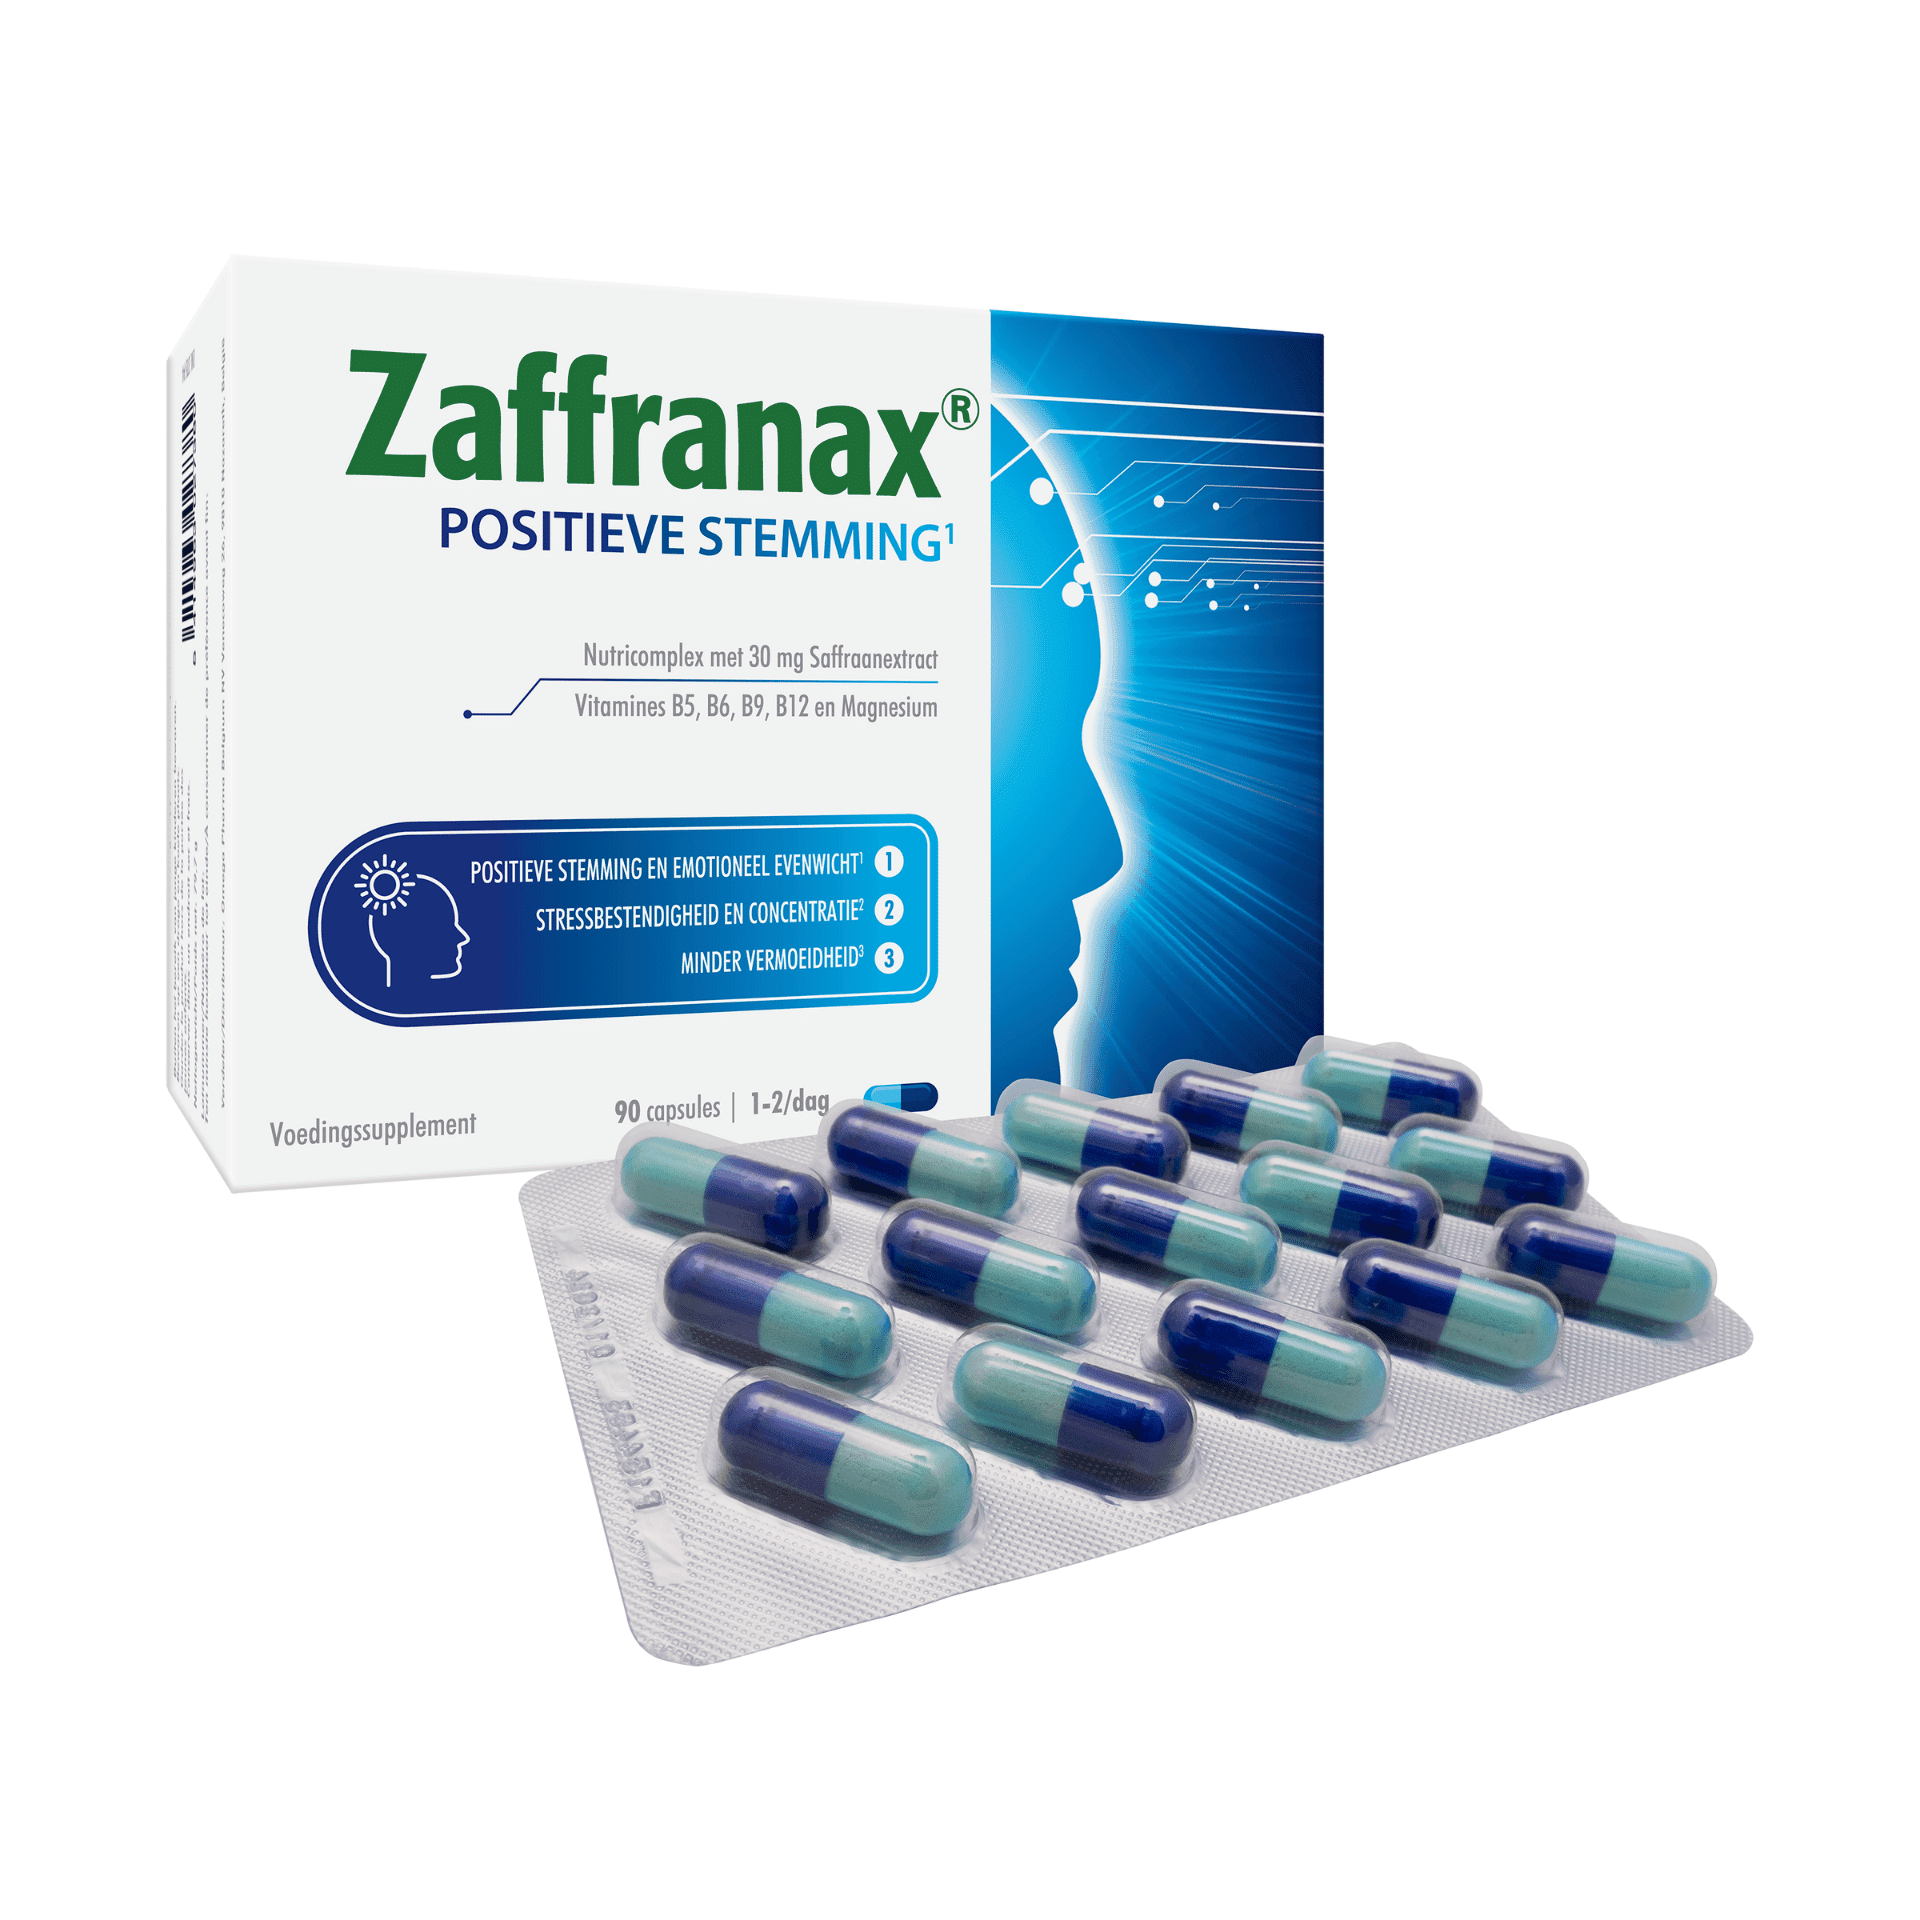 Zaffranax Humeur Positive - émotionnel, stress, fatigue